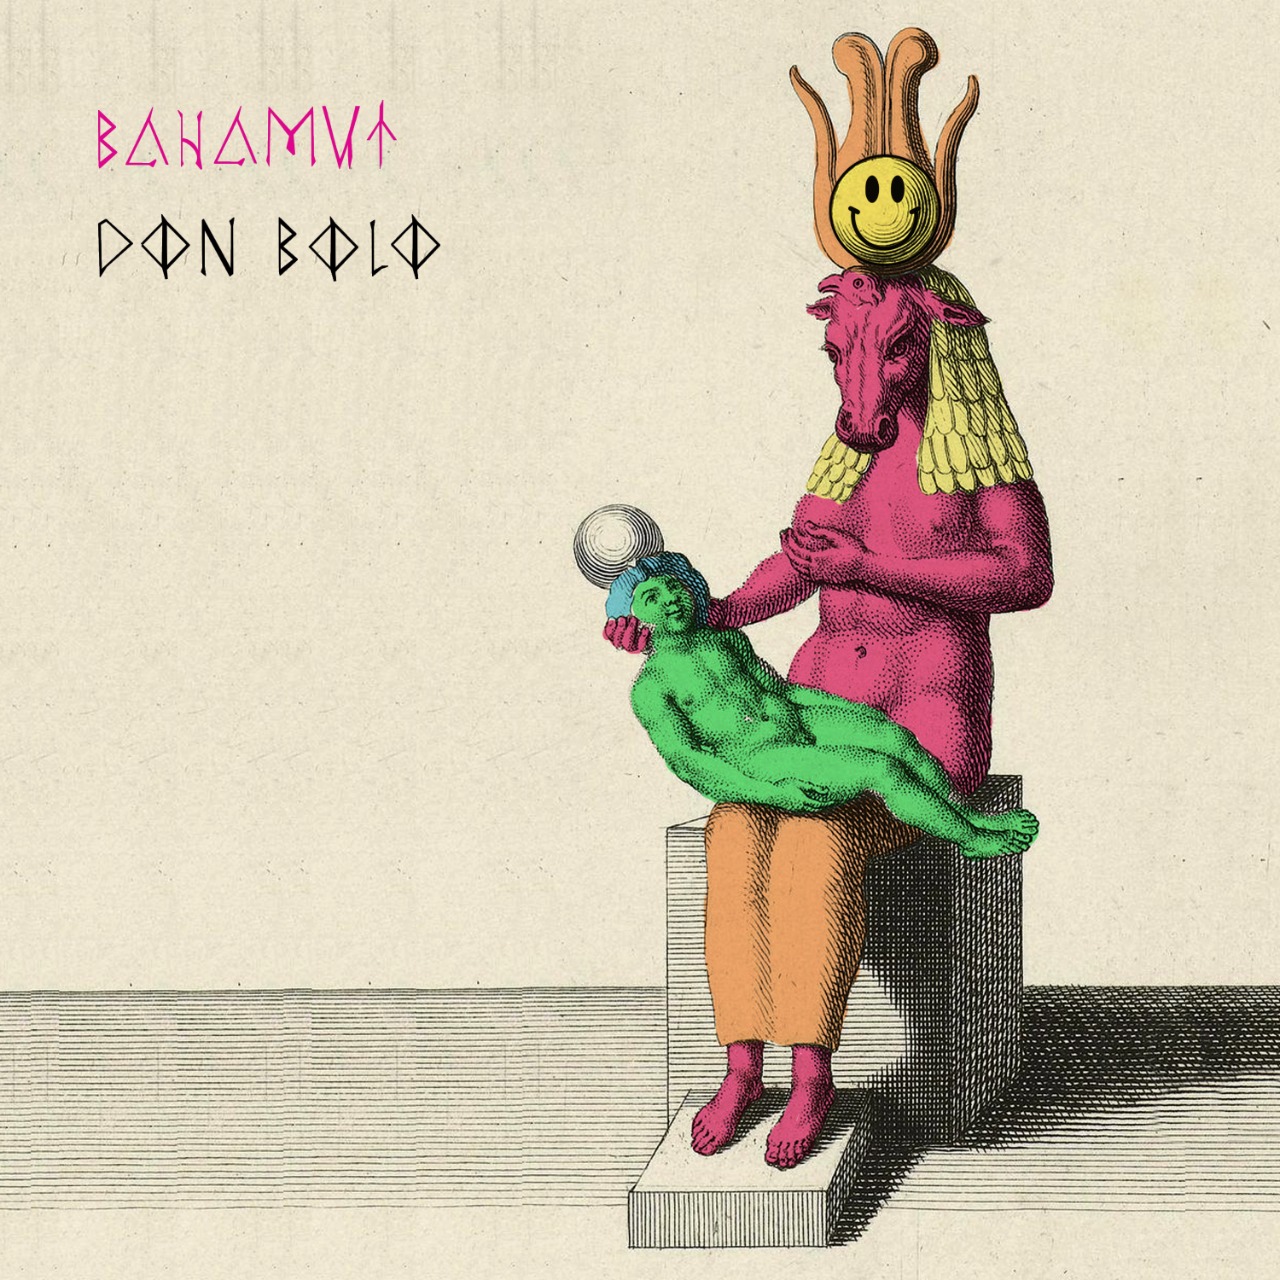  Escucha “Bahamut”, el nuevo disco de Don Bolo